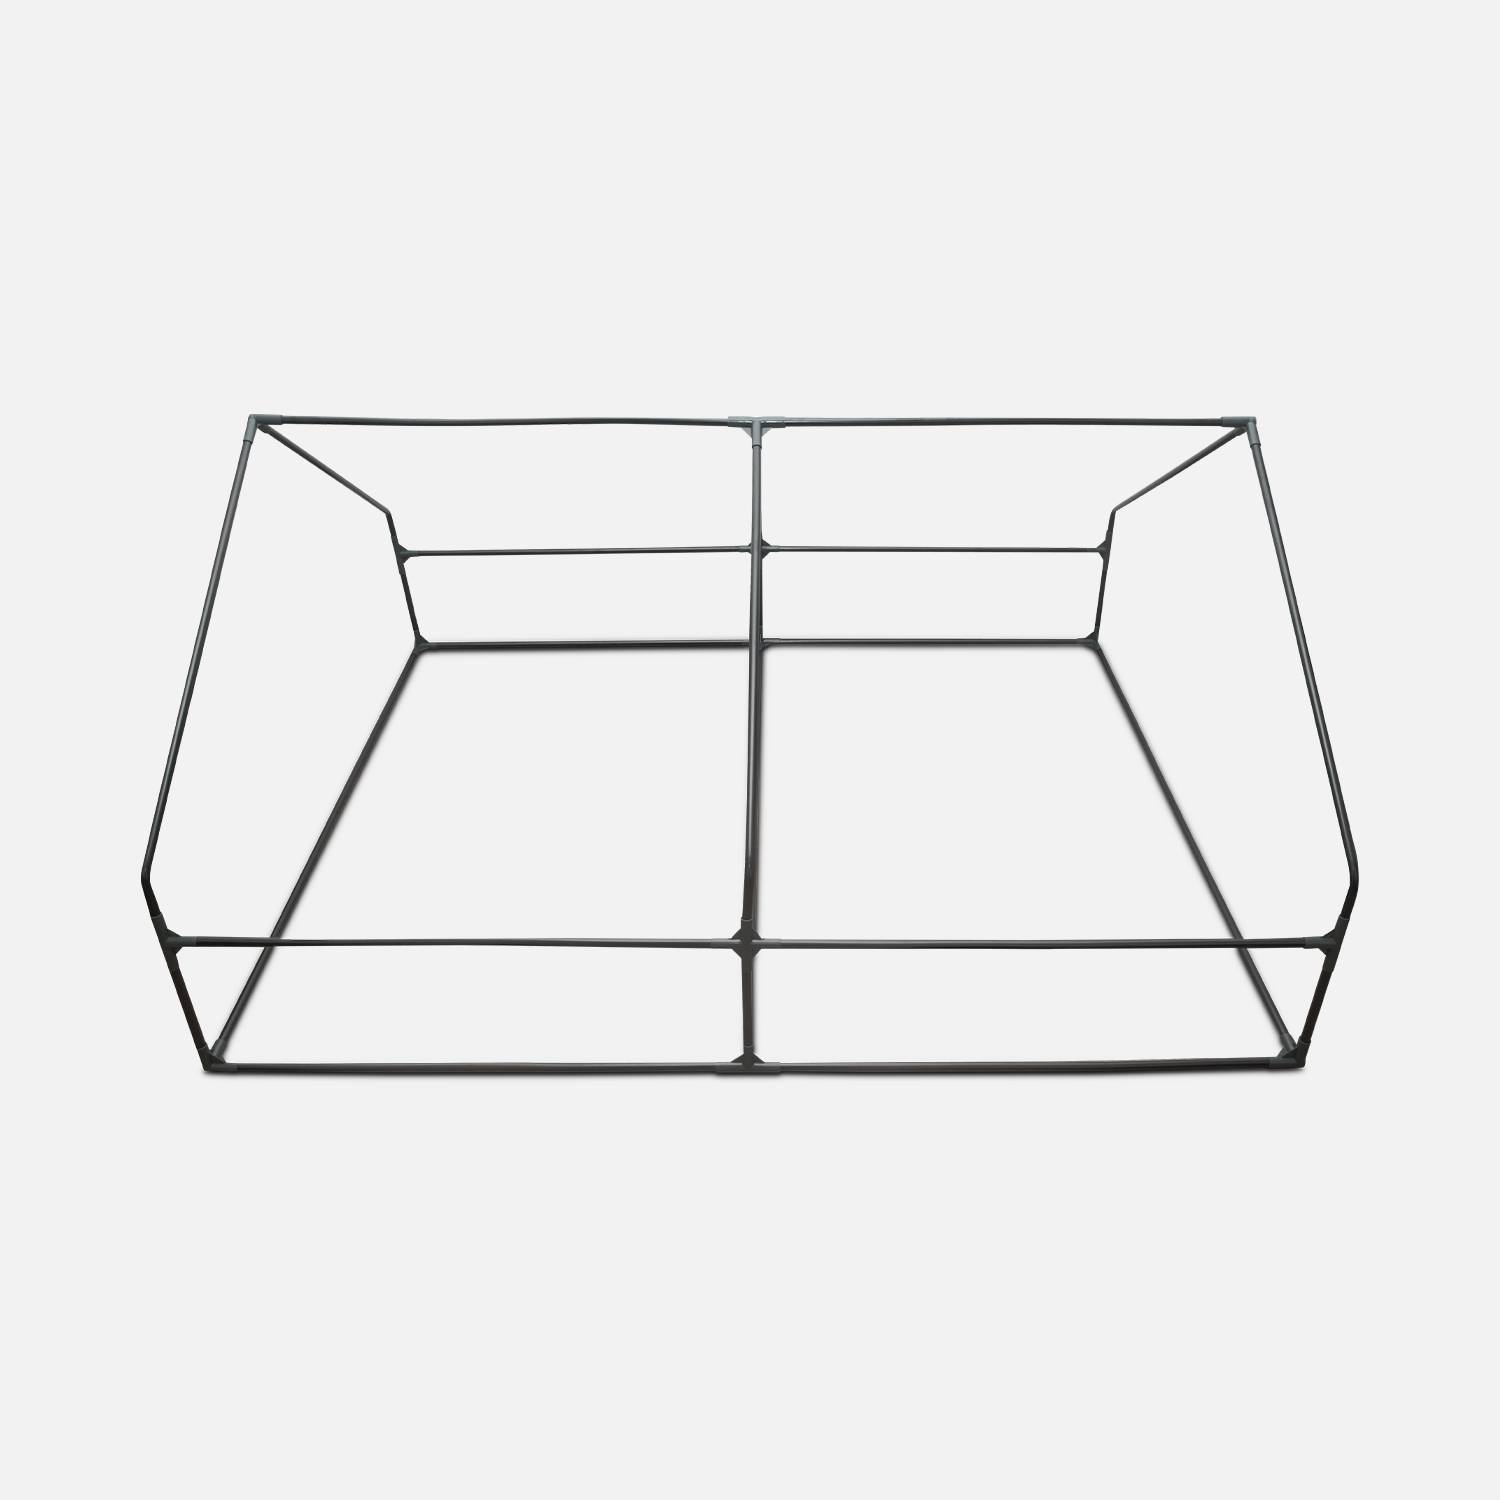 Mini serre de jardin - Ciboulette - 2,5m², serre châssis en polyéthylène Photo4